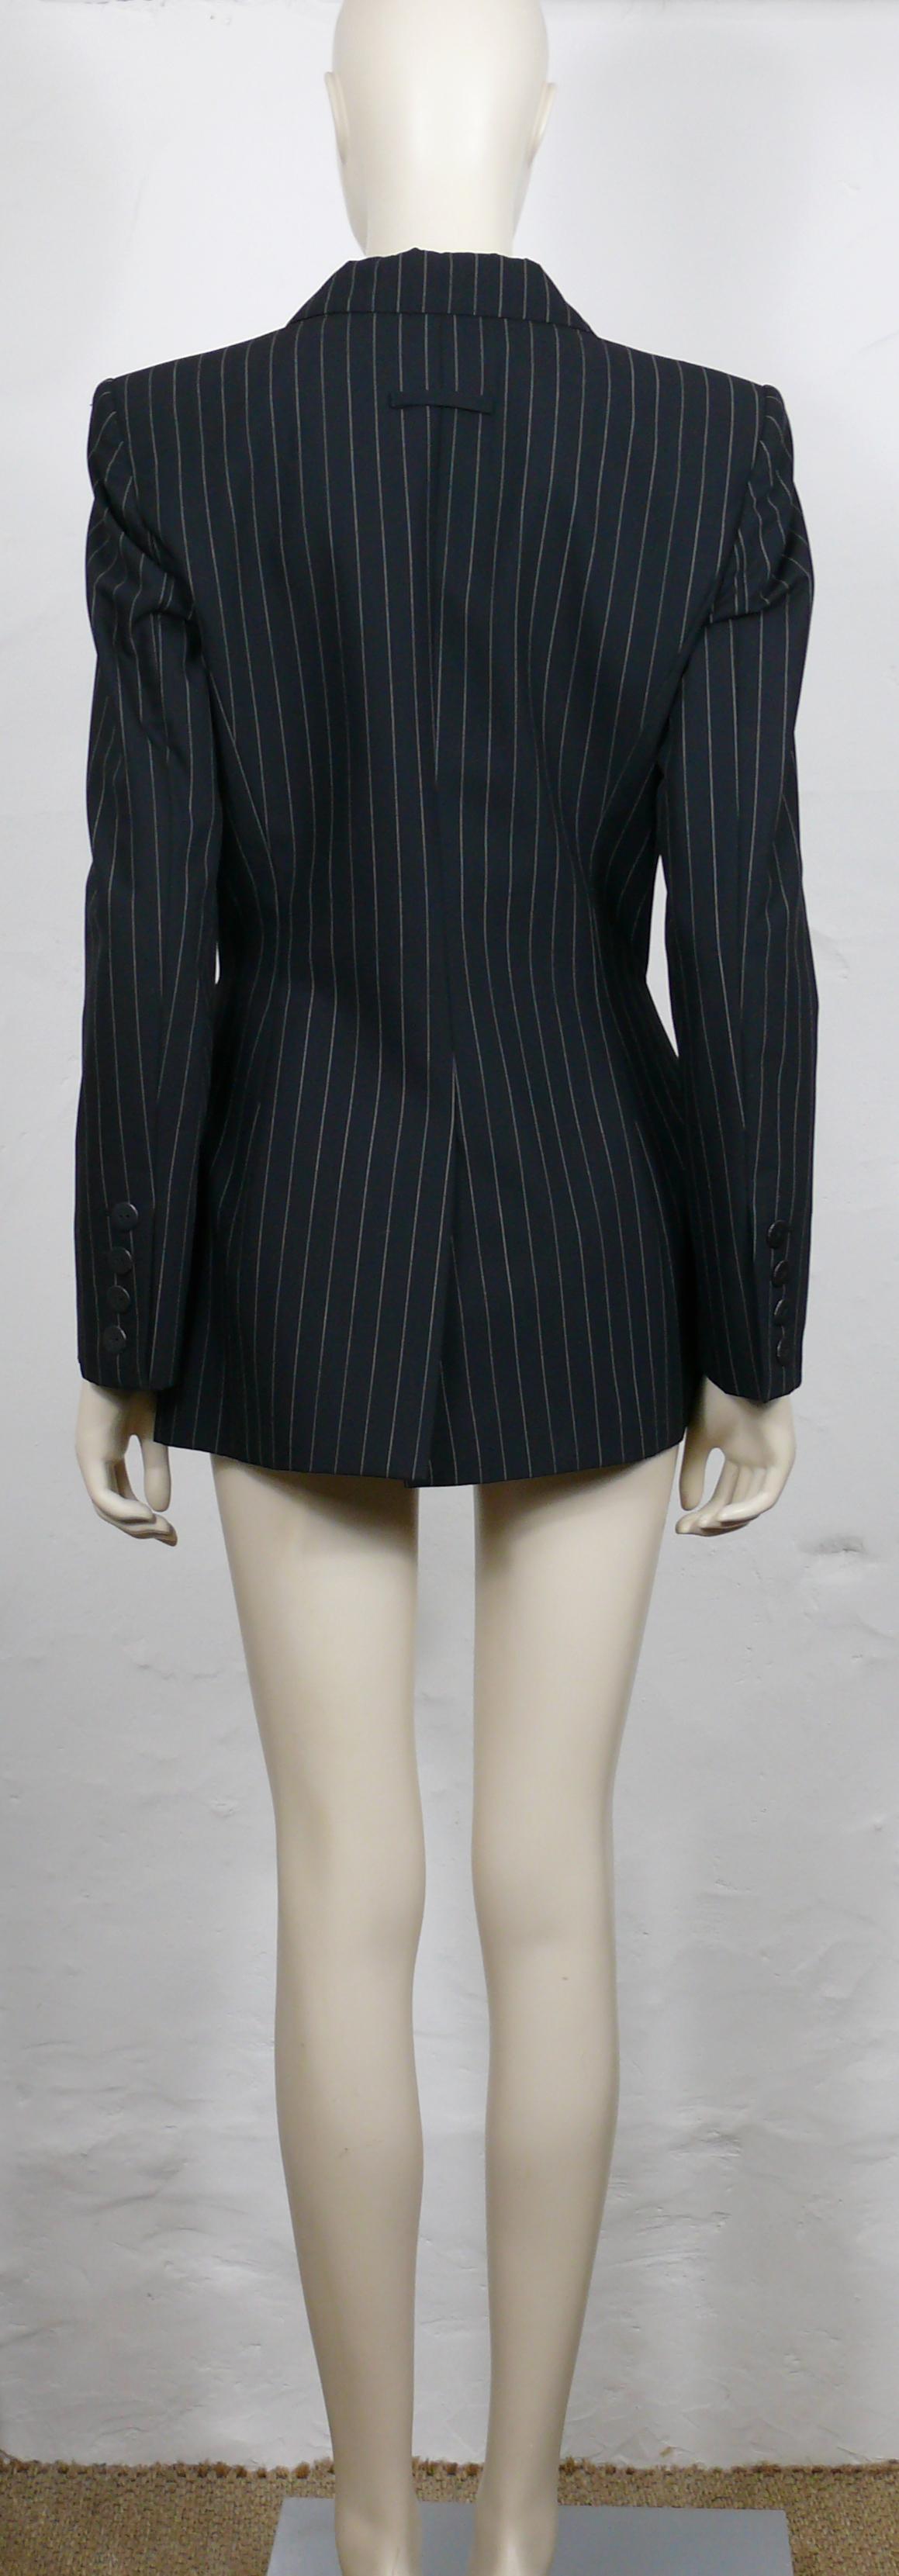 JEAN PAUL GAULTIER Vintage Black Pinstripe Cut-Out Waist Blazer Jacket For Sale 4